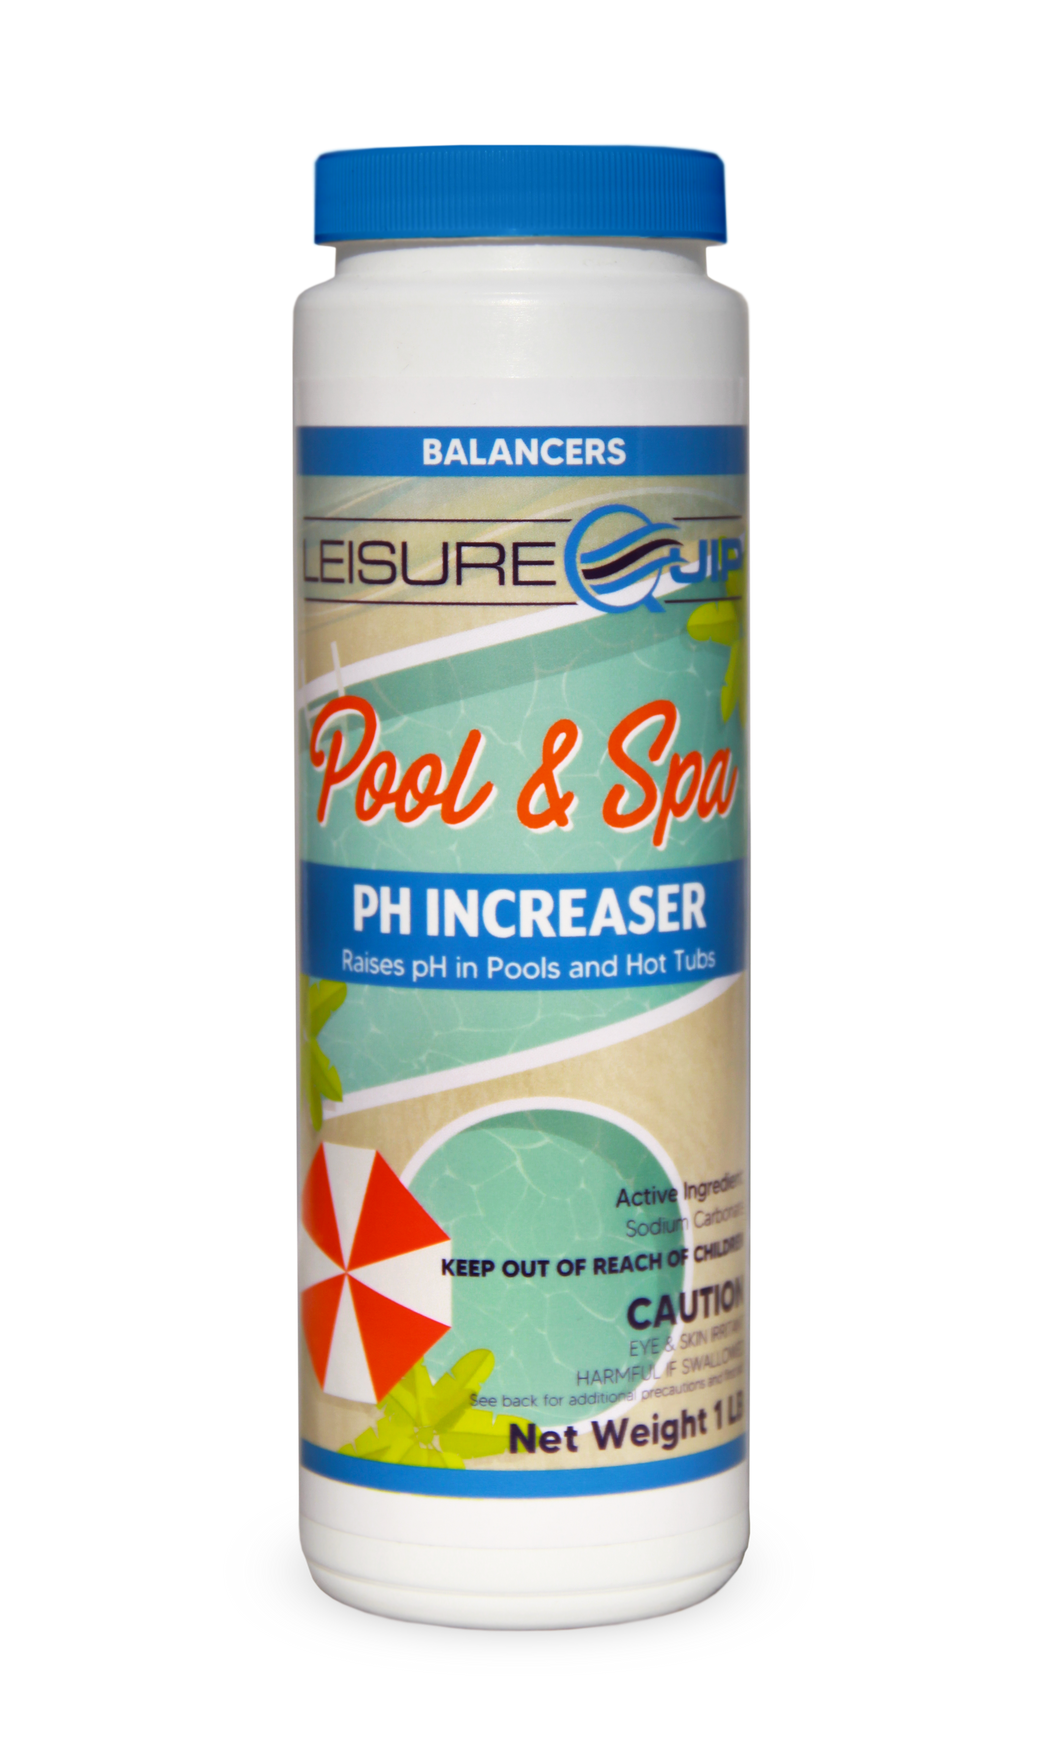 LeisureQuip Pool & Spa pH Increaser 1lb